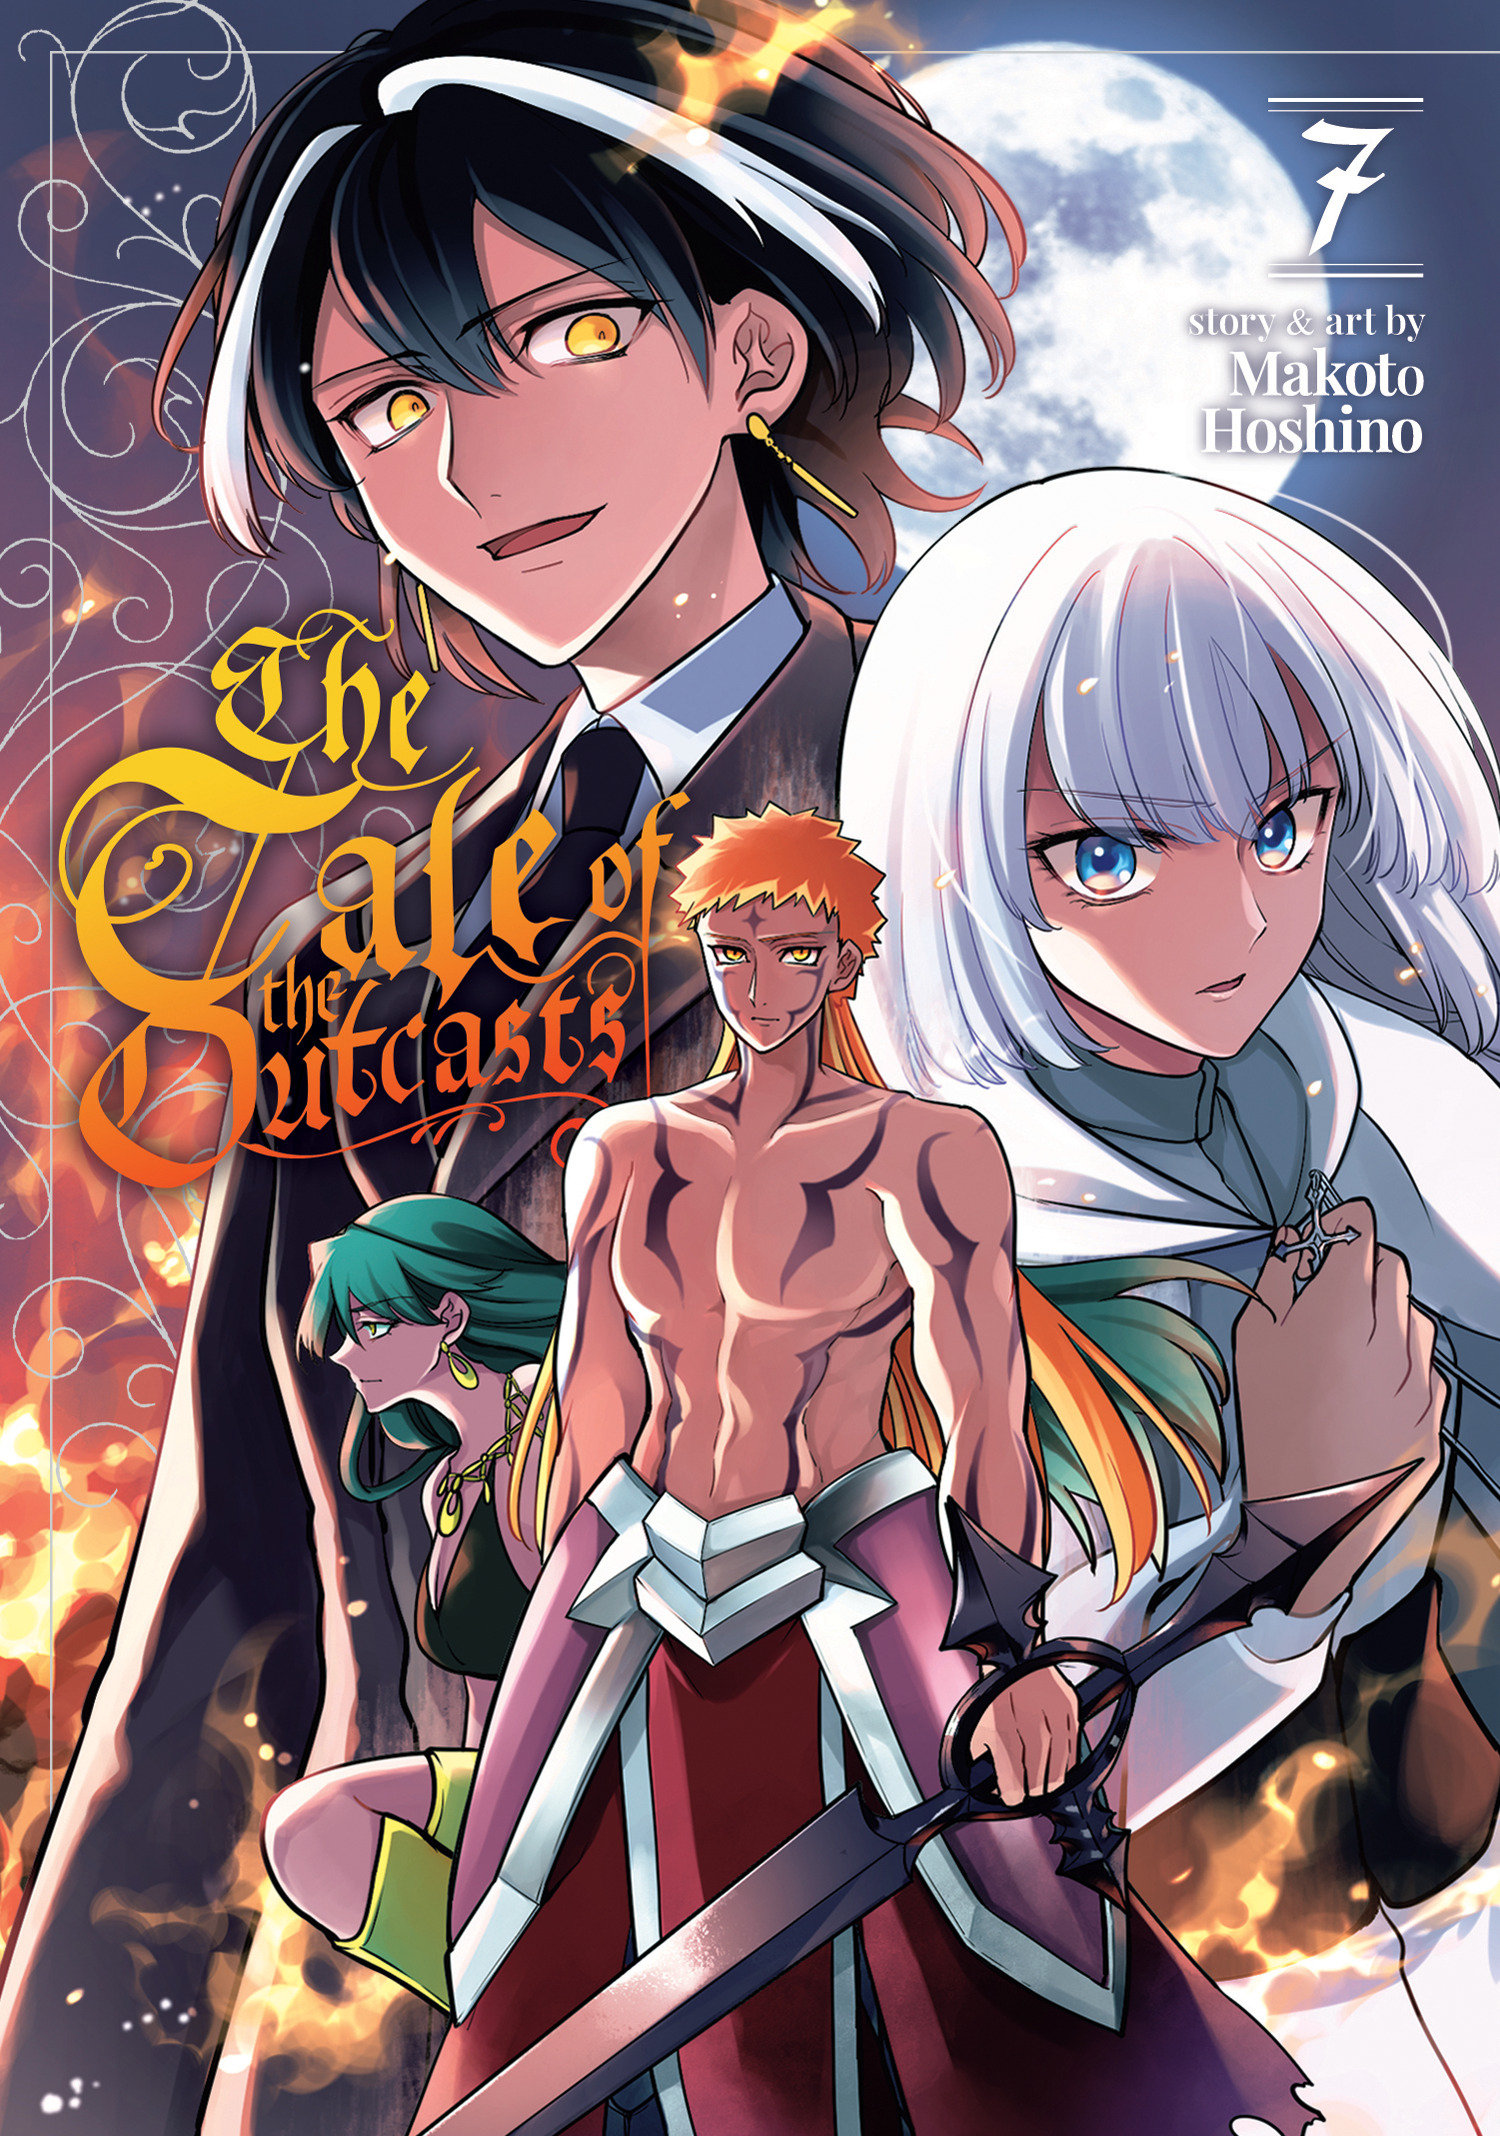 Tale of the Outcasts Manga Volume 7